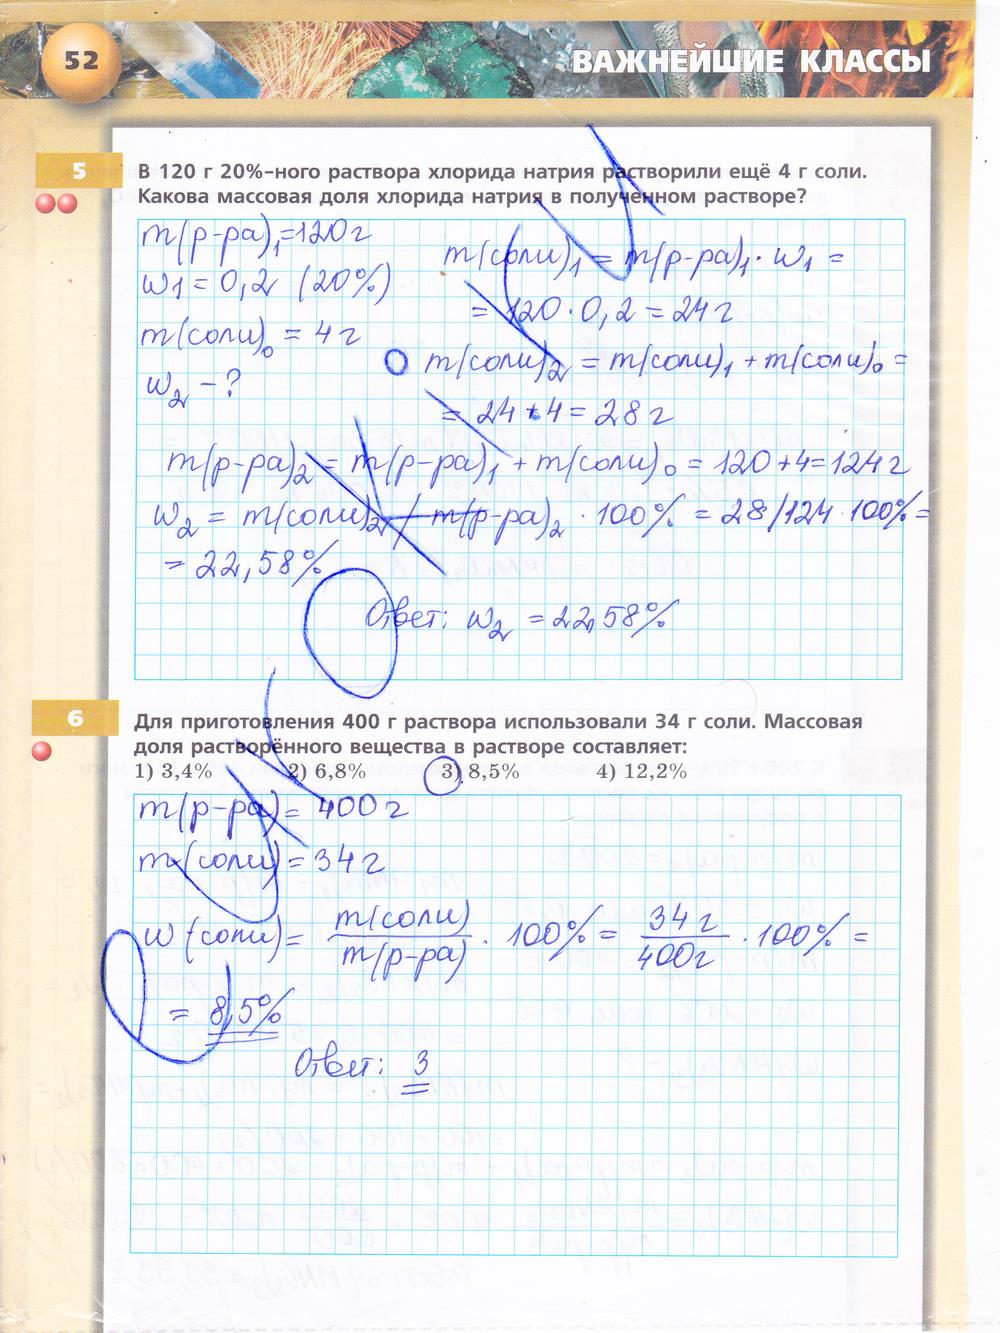 гдз 8 класс тетрадь-тренажёр страница 52 химия Гара